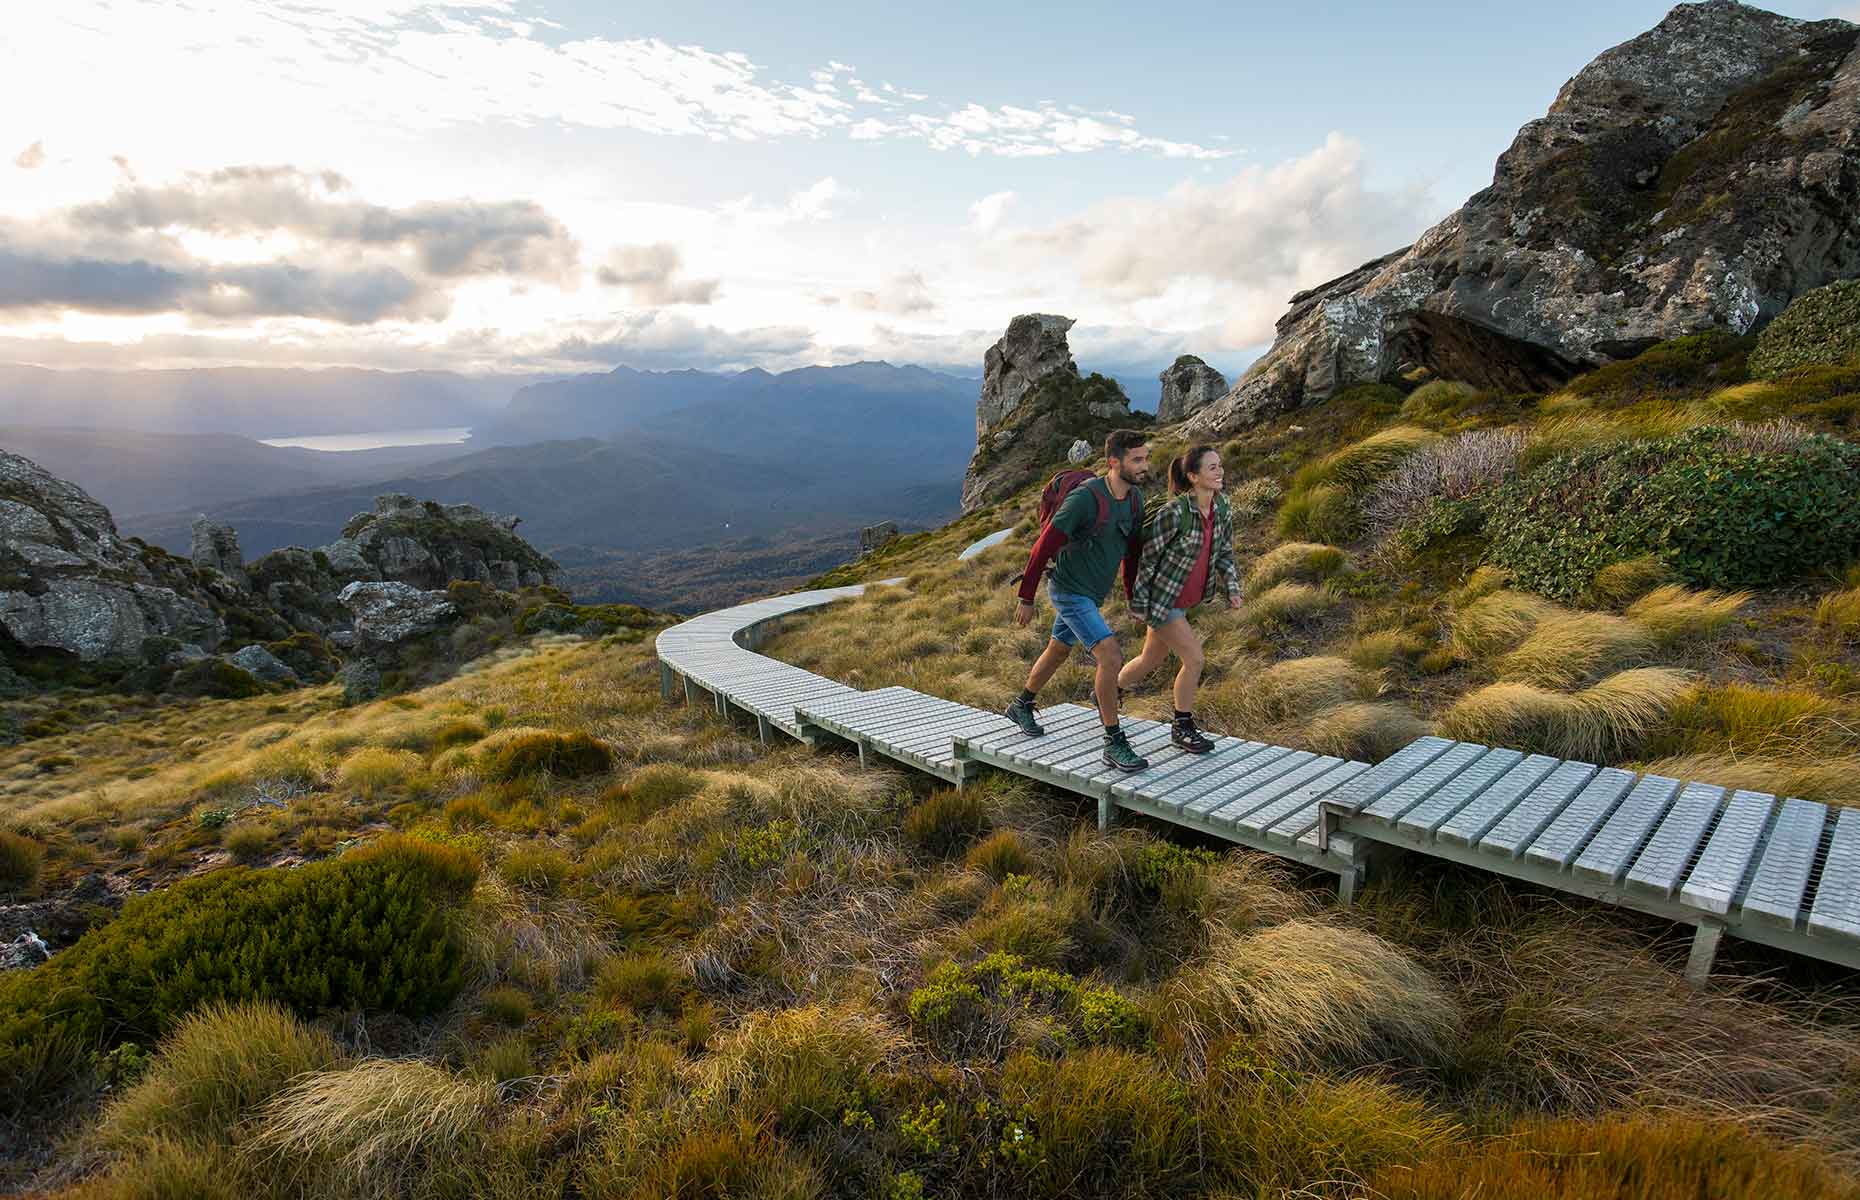 Tuatapere Hump Ridge Track, the next Great Walk, New Zealand (Image credits: Tourism New Zealand)